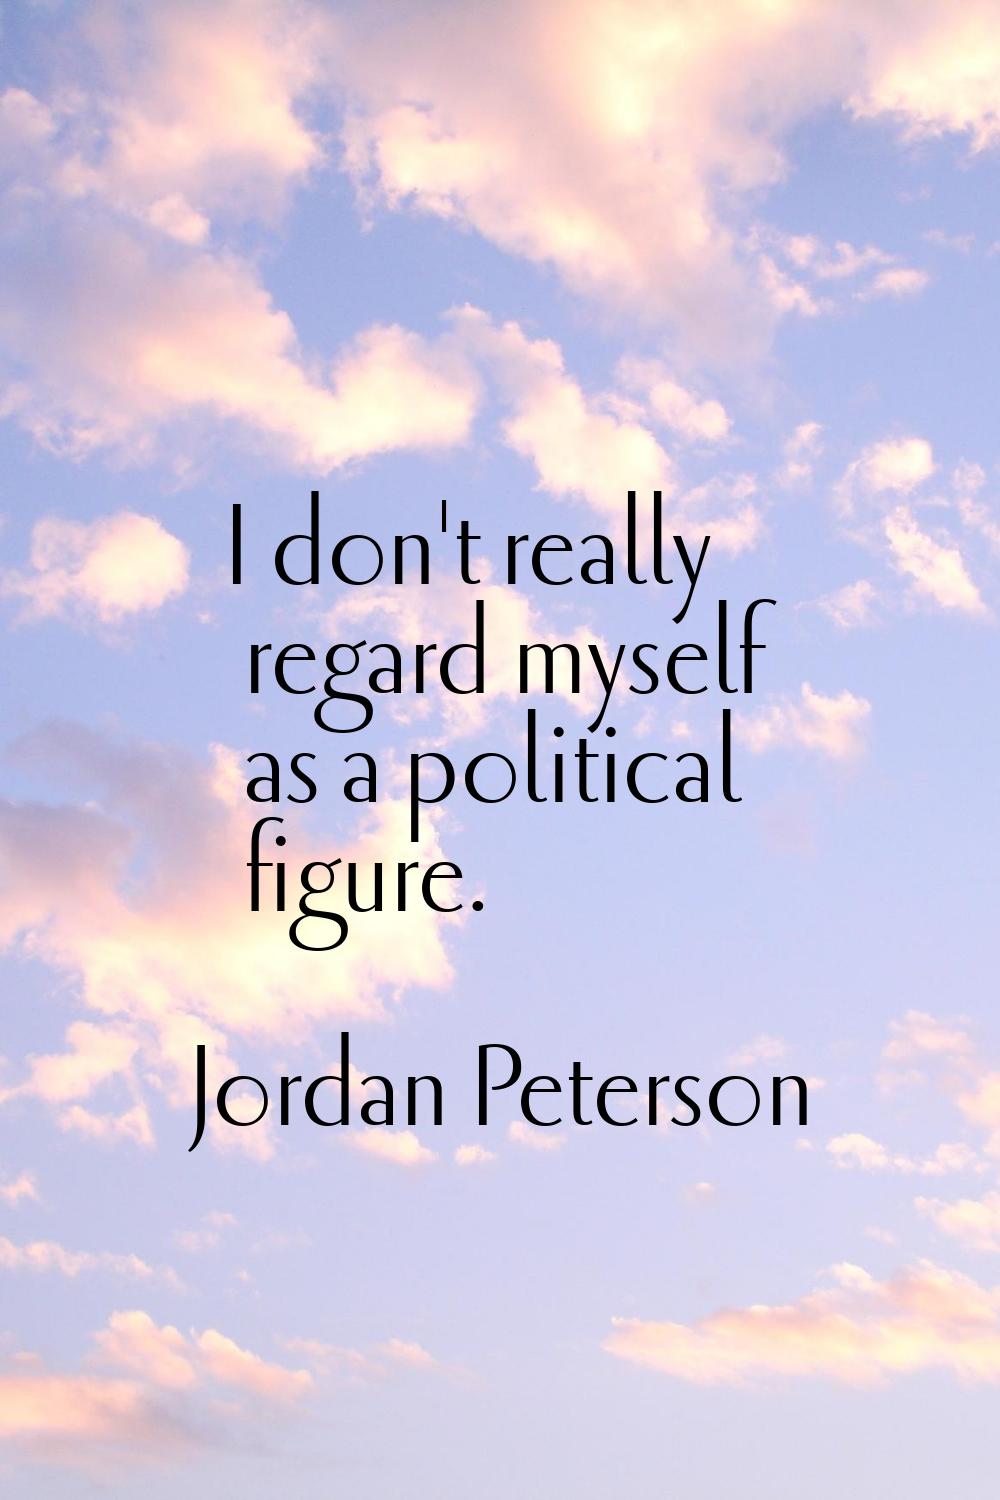 I don't really regard myself as a political figure.